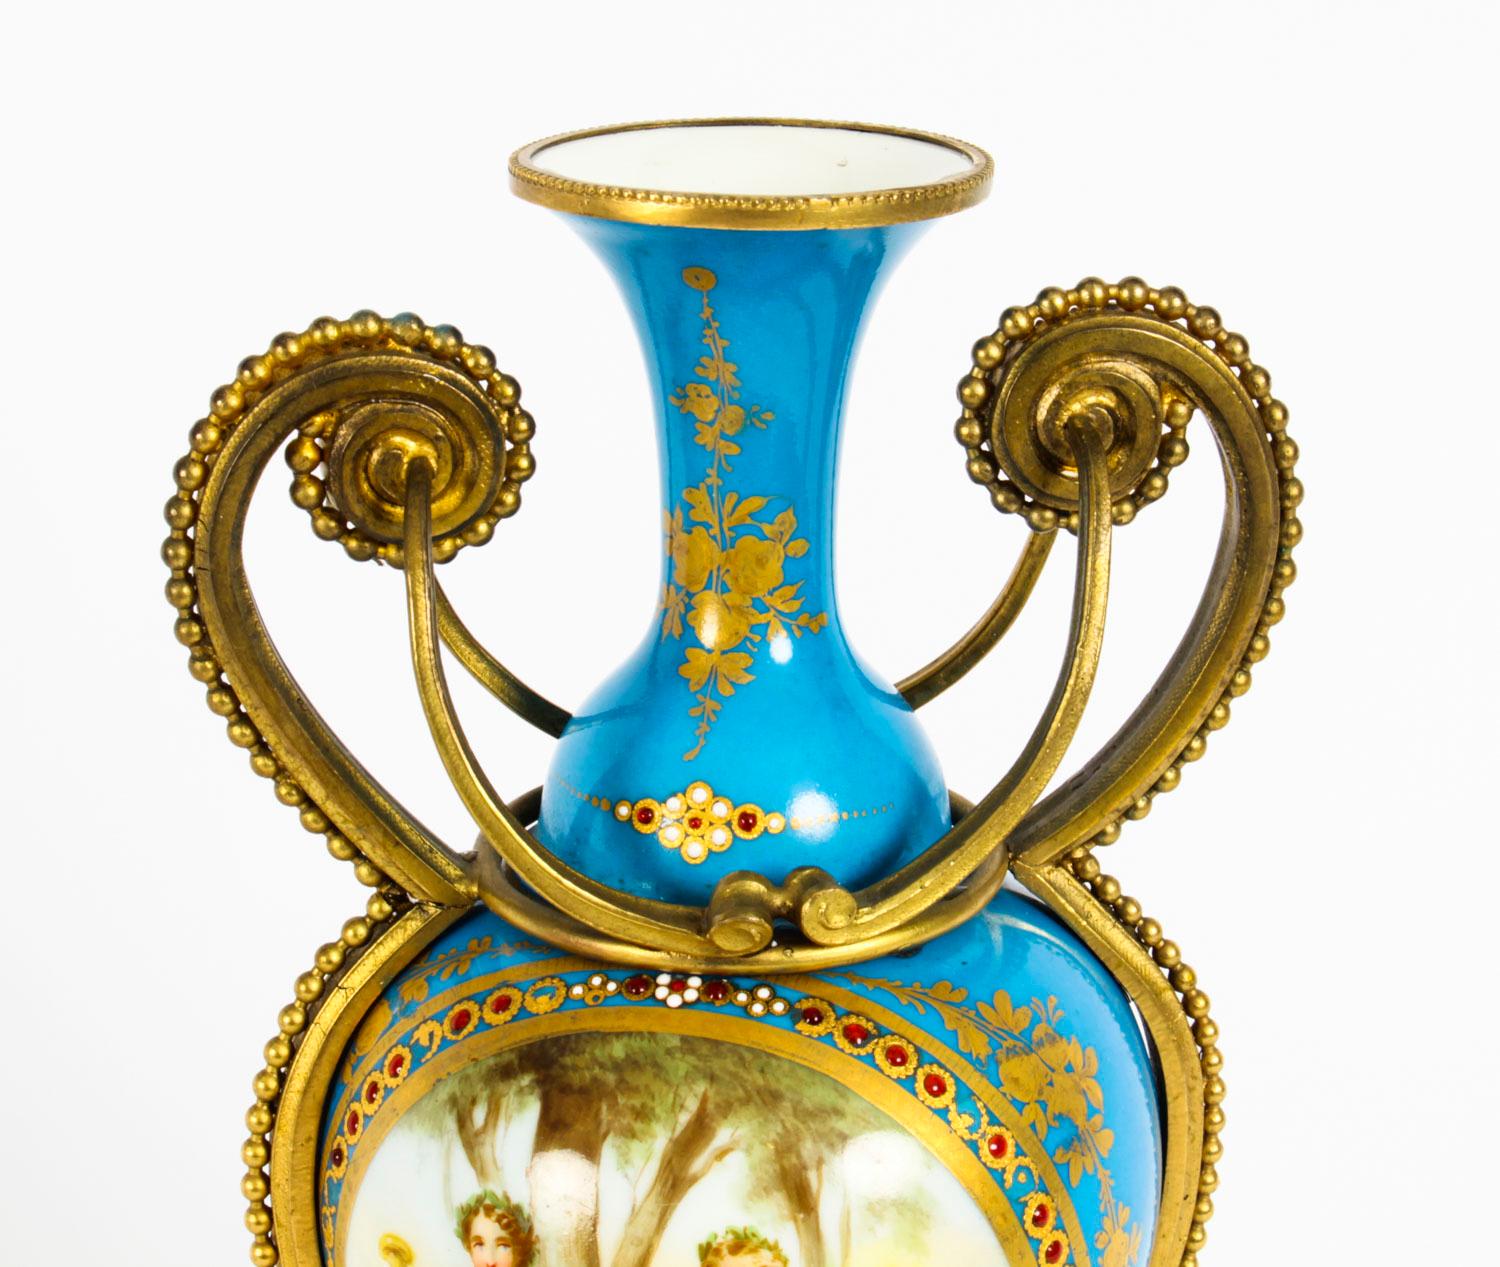 Antique Pair of French Ormolu Mounted Bleu Celeste Sèvres Vases, 19th Century For Sale 10